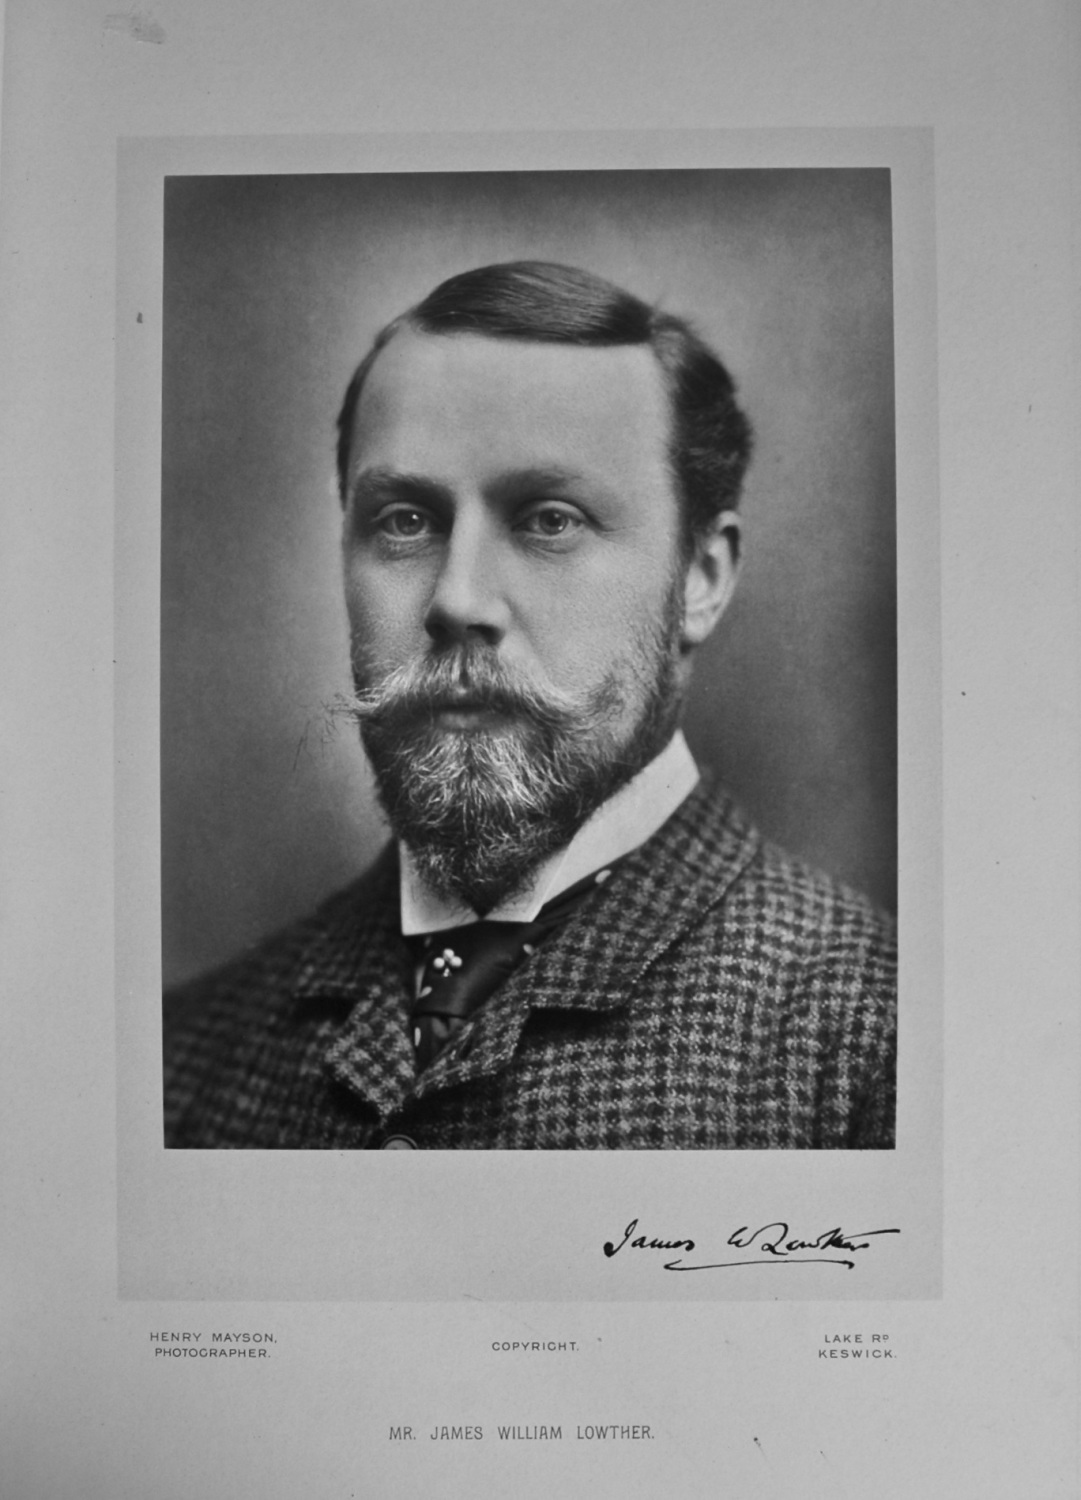 Mr. James William Lowther. 1894c.